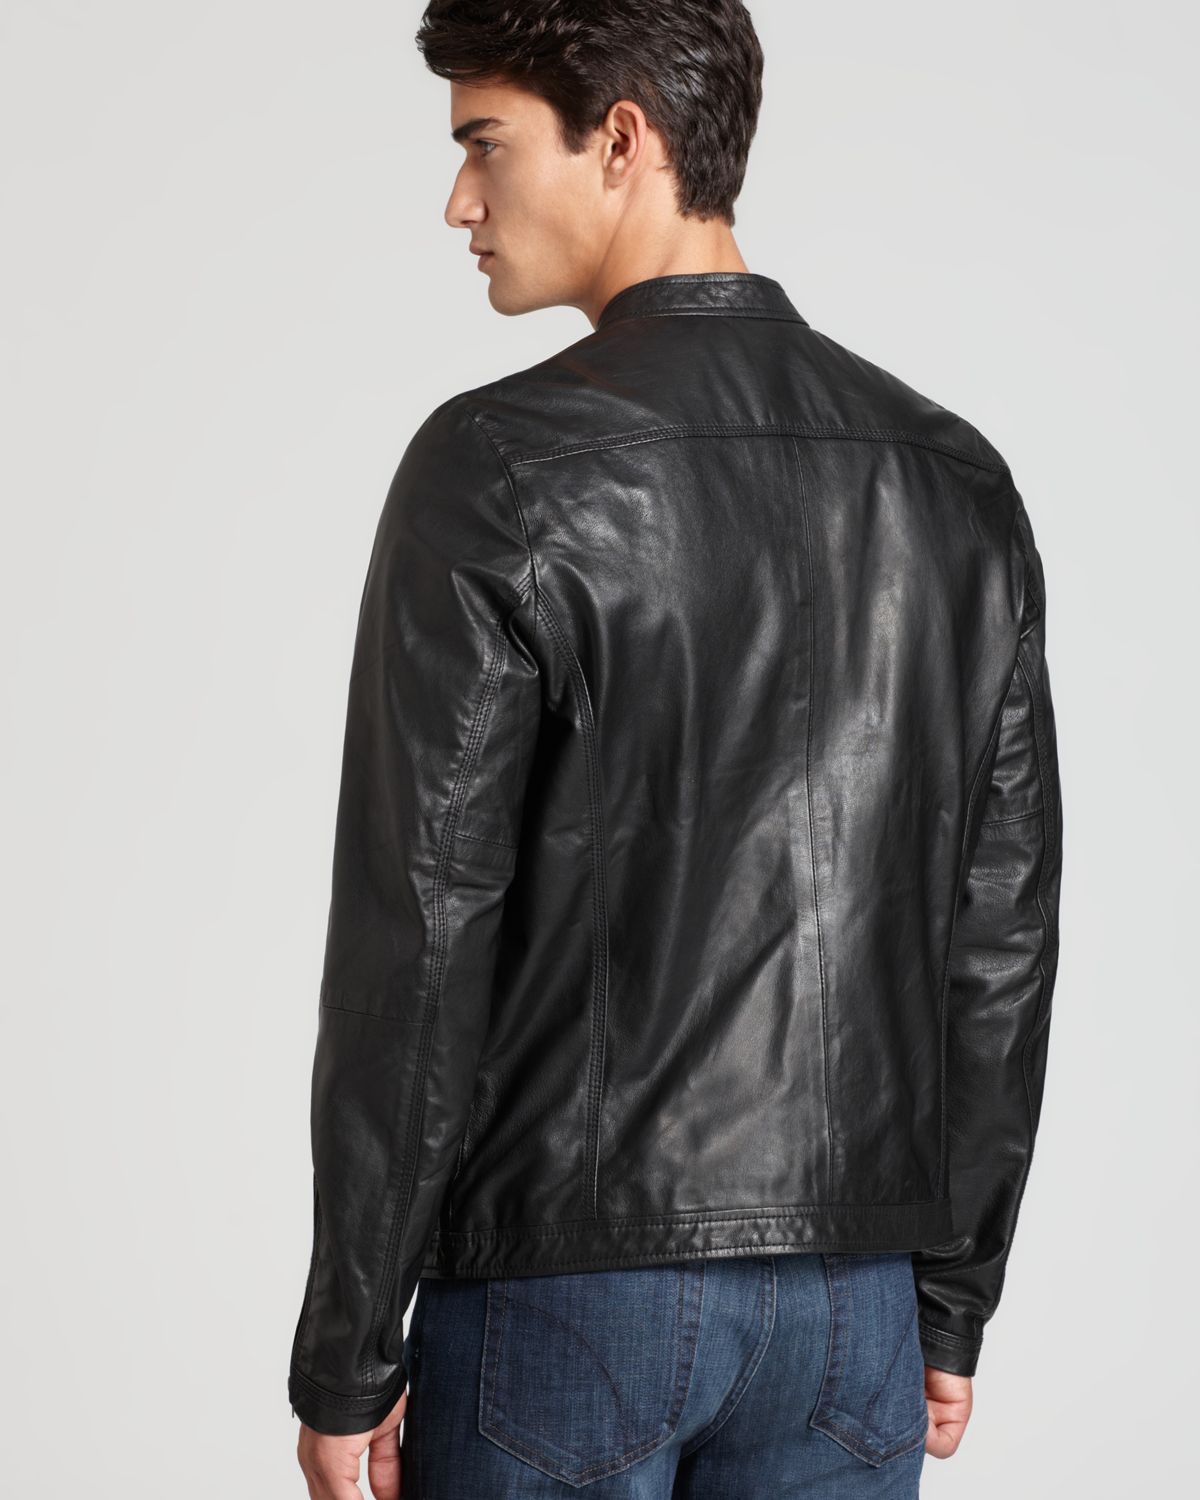 DIESEL Lagnum Leather Jacket in Black for Men - Lyst